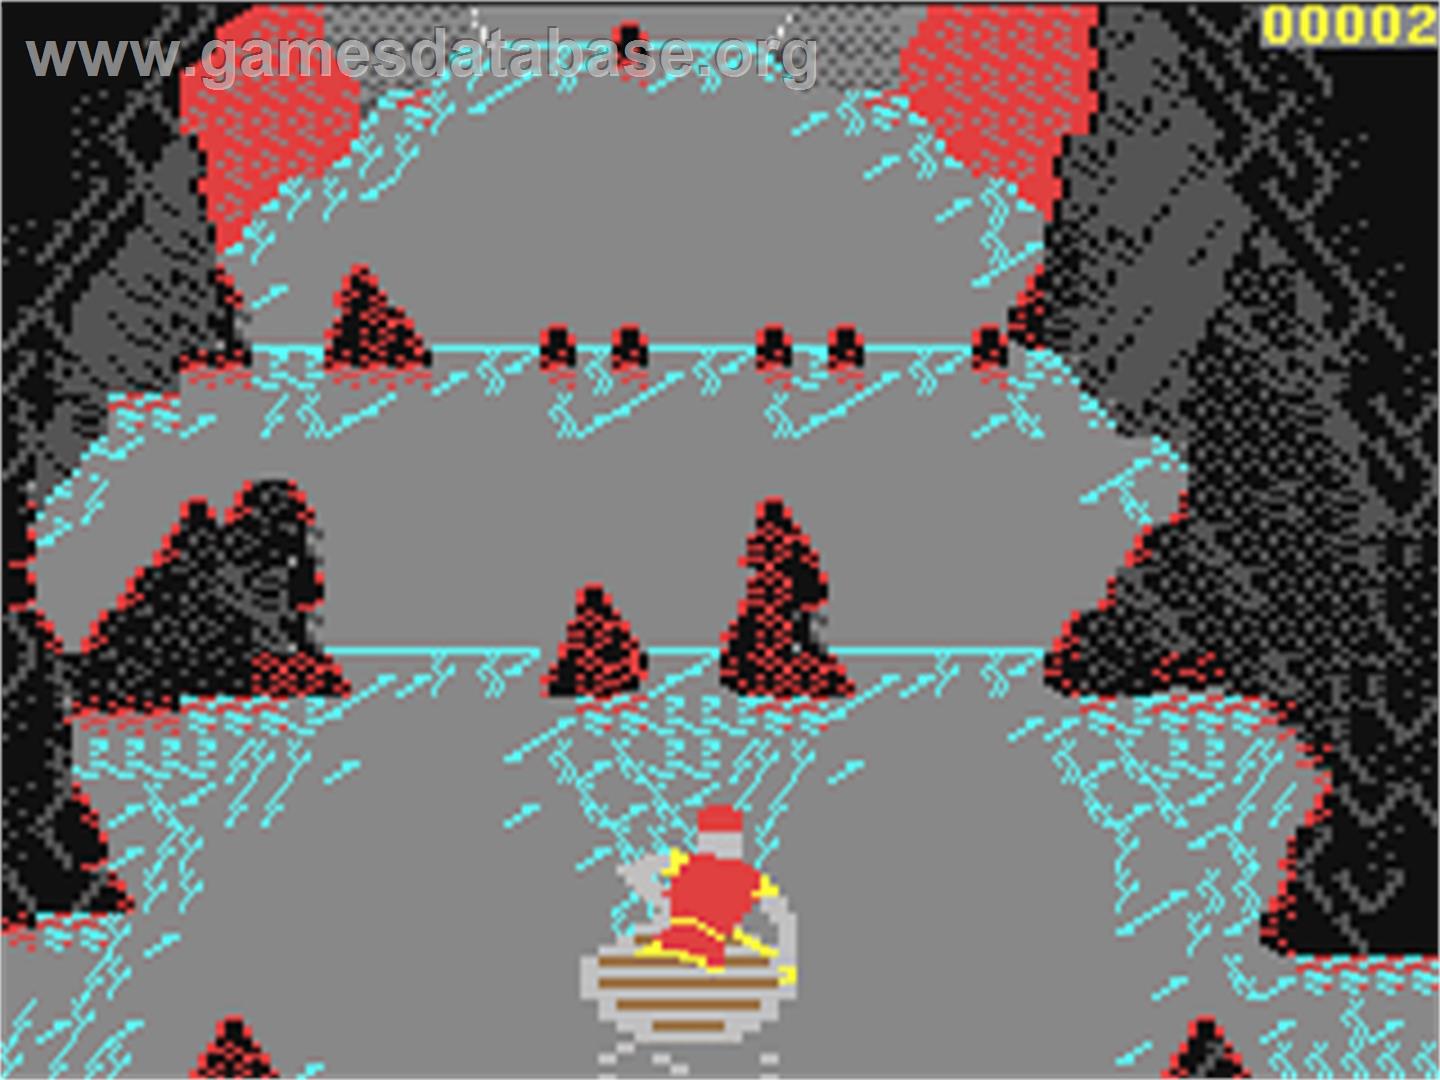 Dragon's Lair II: Escape from Singe's Castle - Commodore 64 - Artwork - In Game